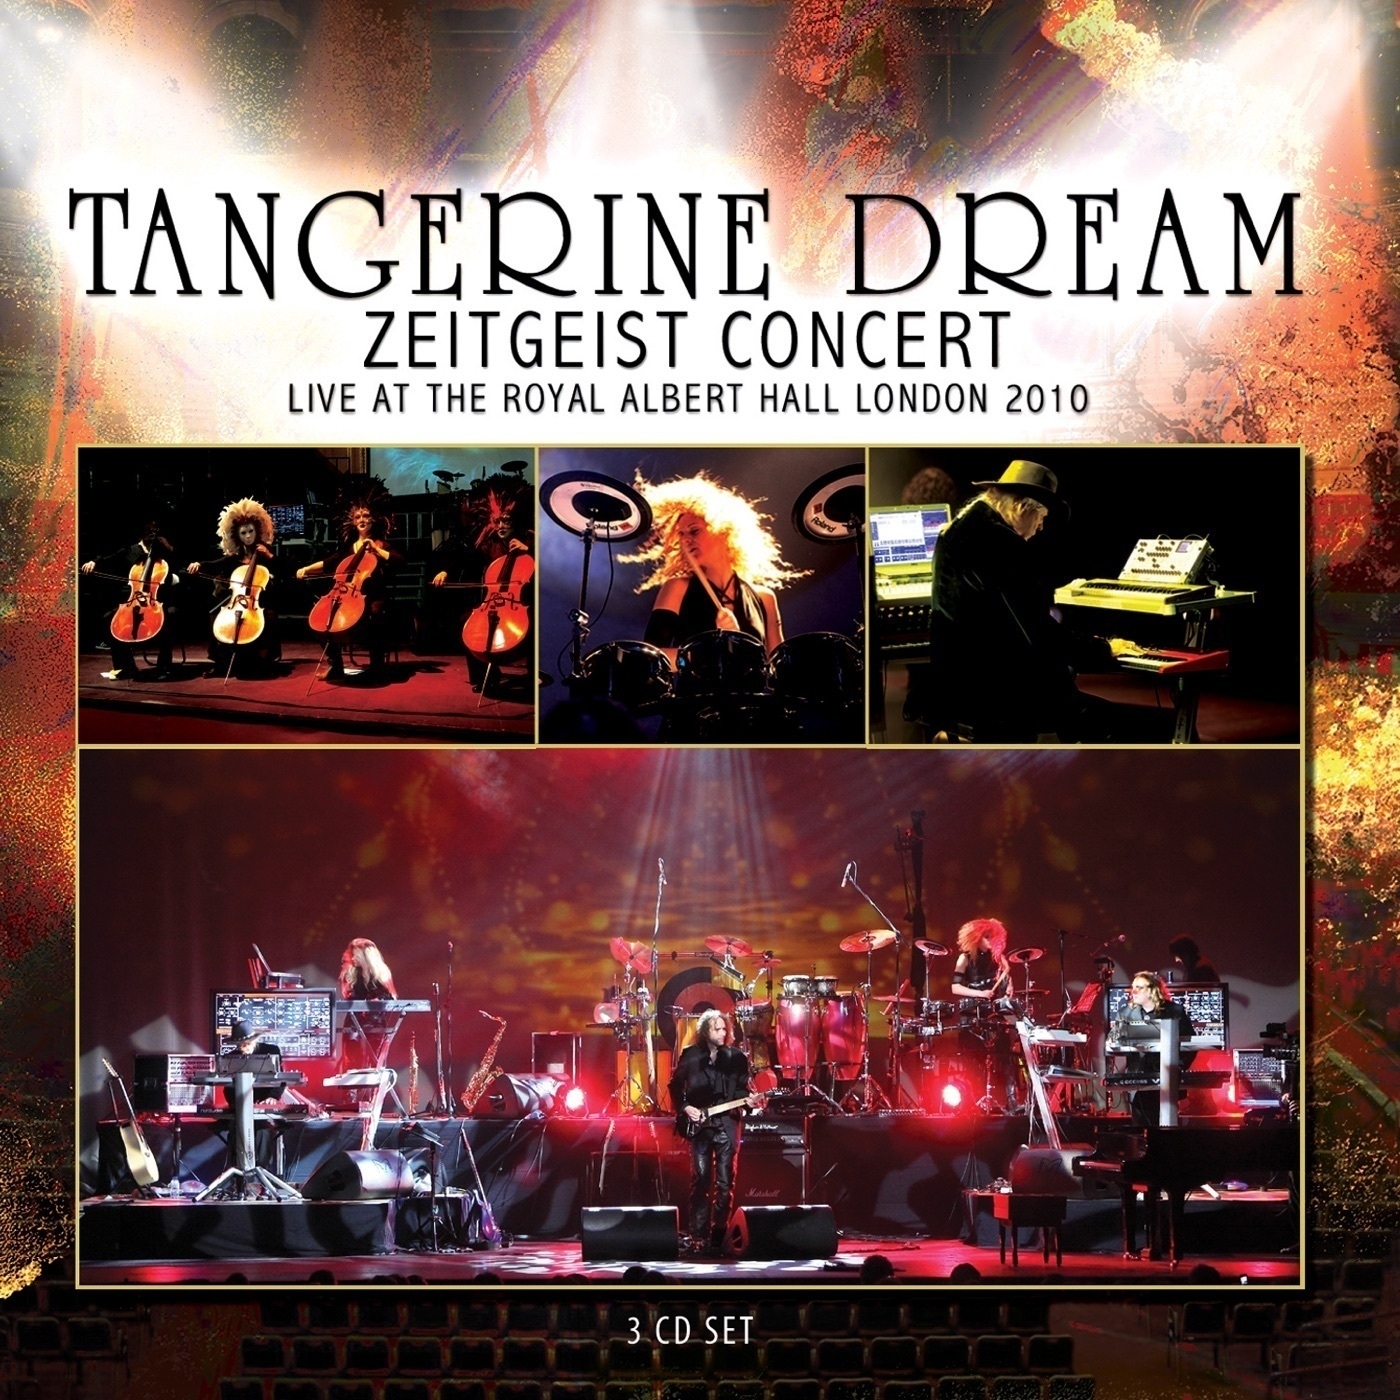 Album cover of the Tangerine Dream Zeitgeist Concert, at the Royal Albert Hall London 2010